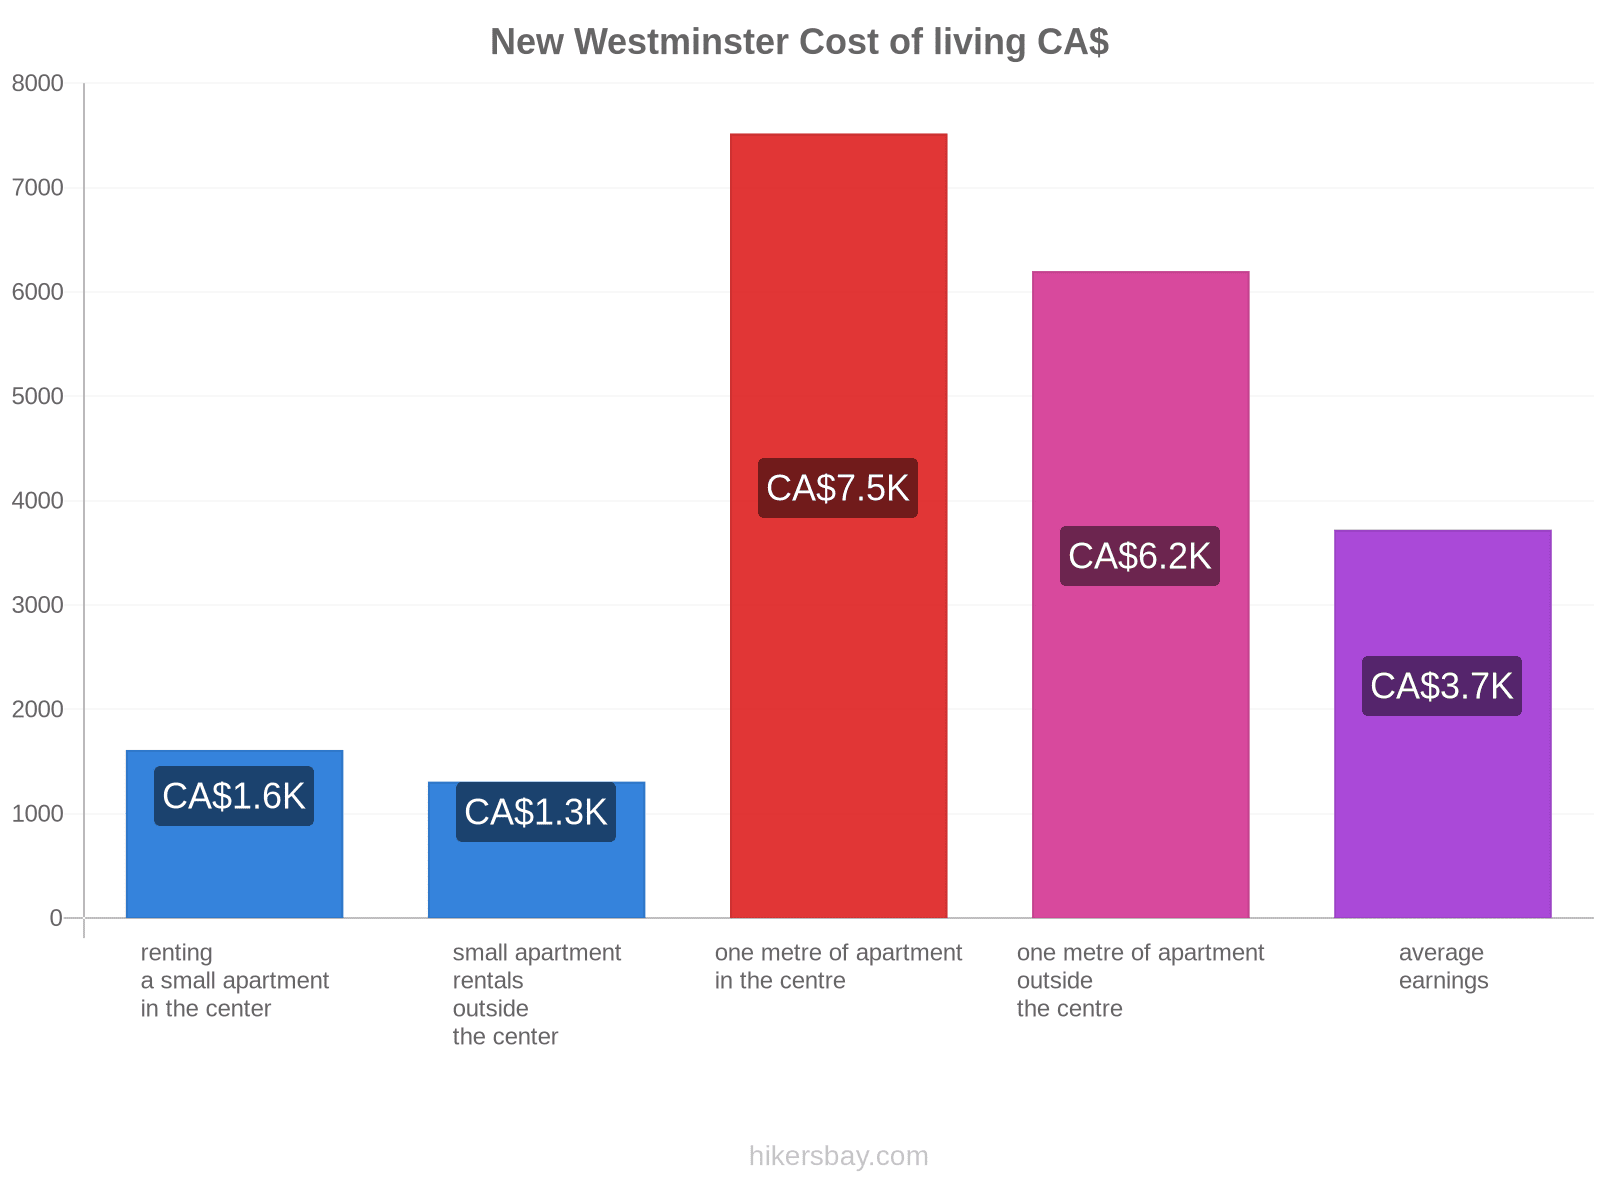 New Westminster cost of living hikersbay.com